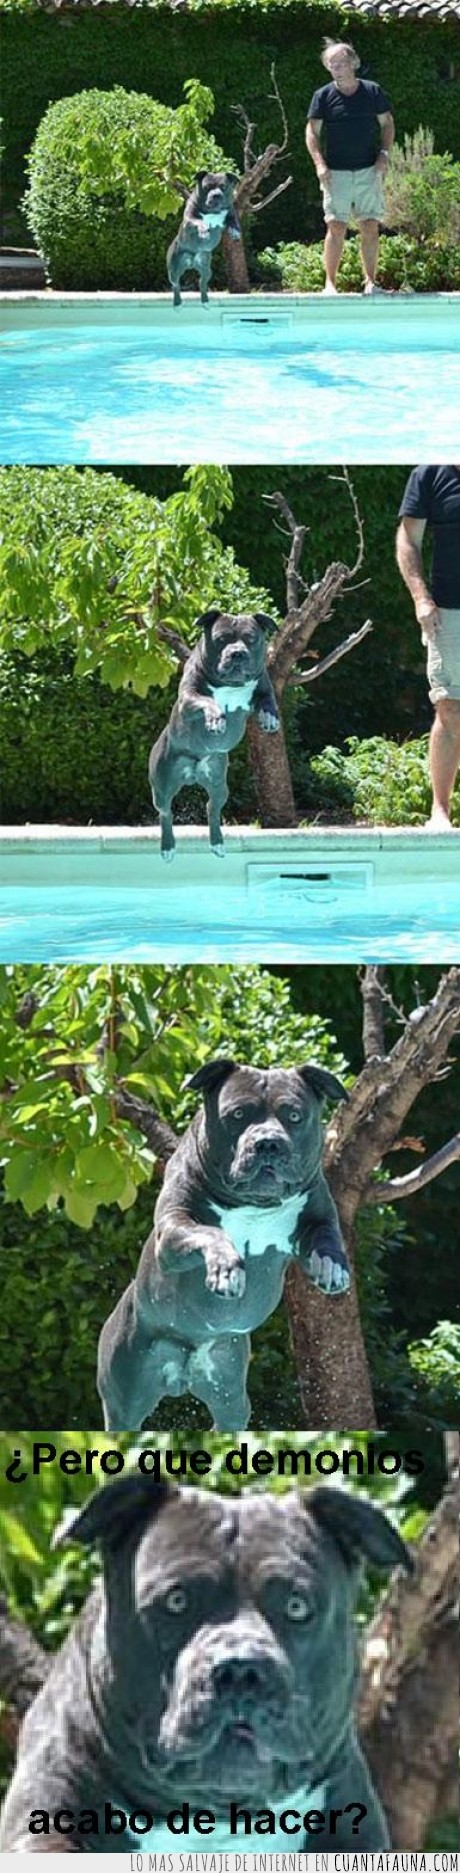 vida,error,exacto,momento,piscina,saltar,perro